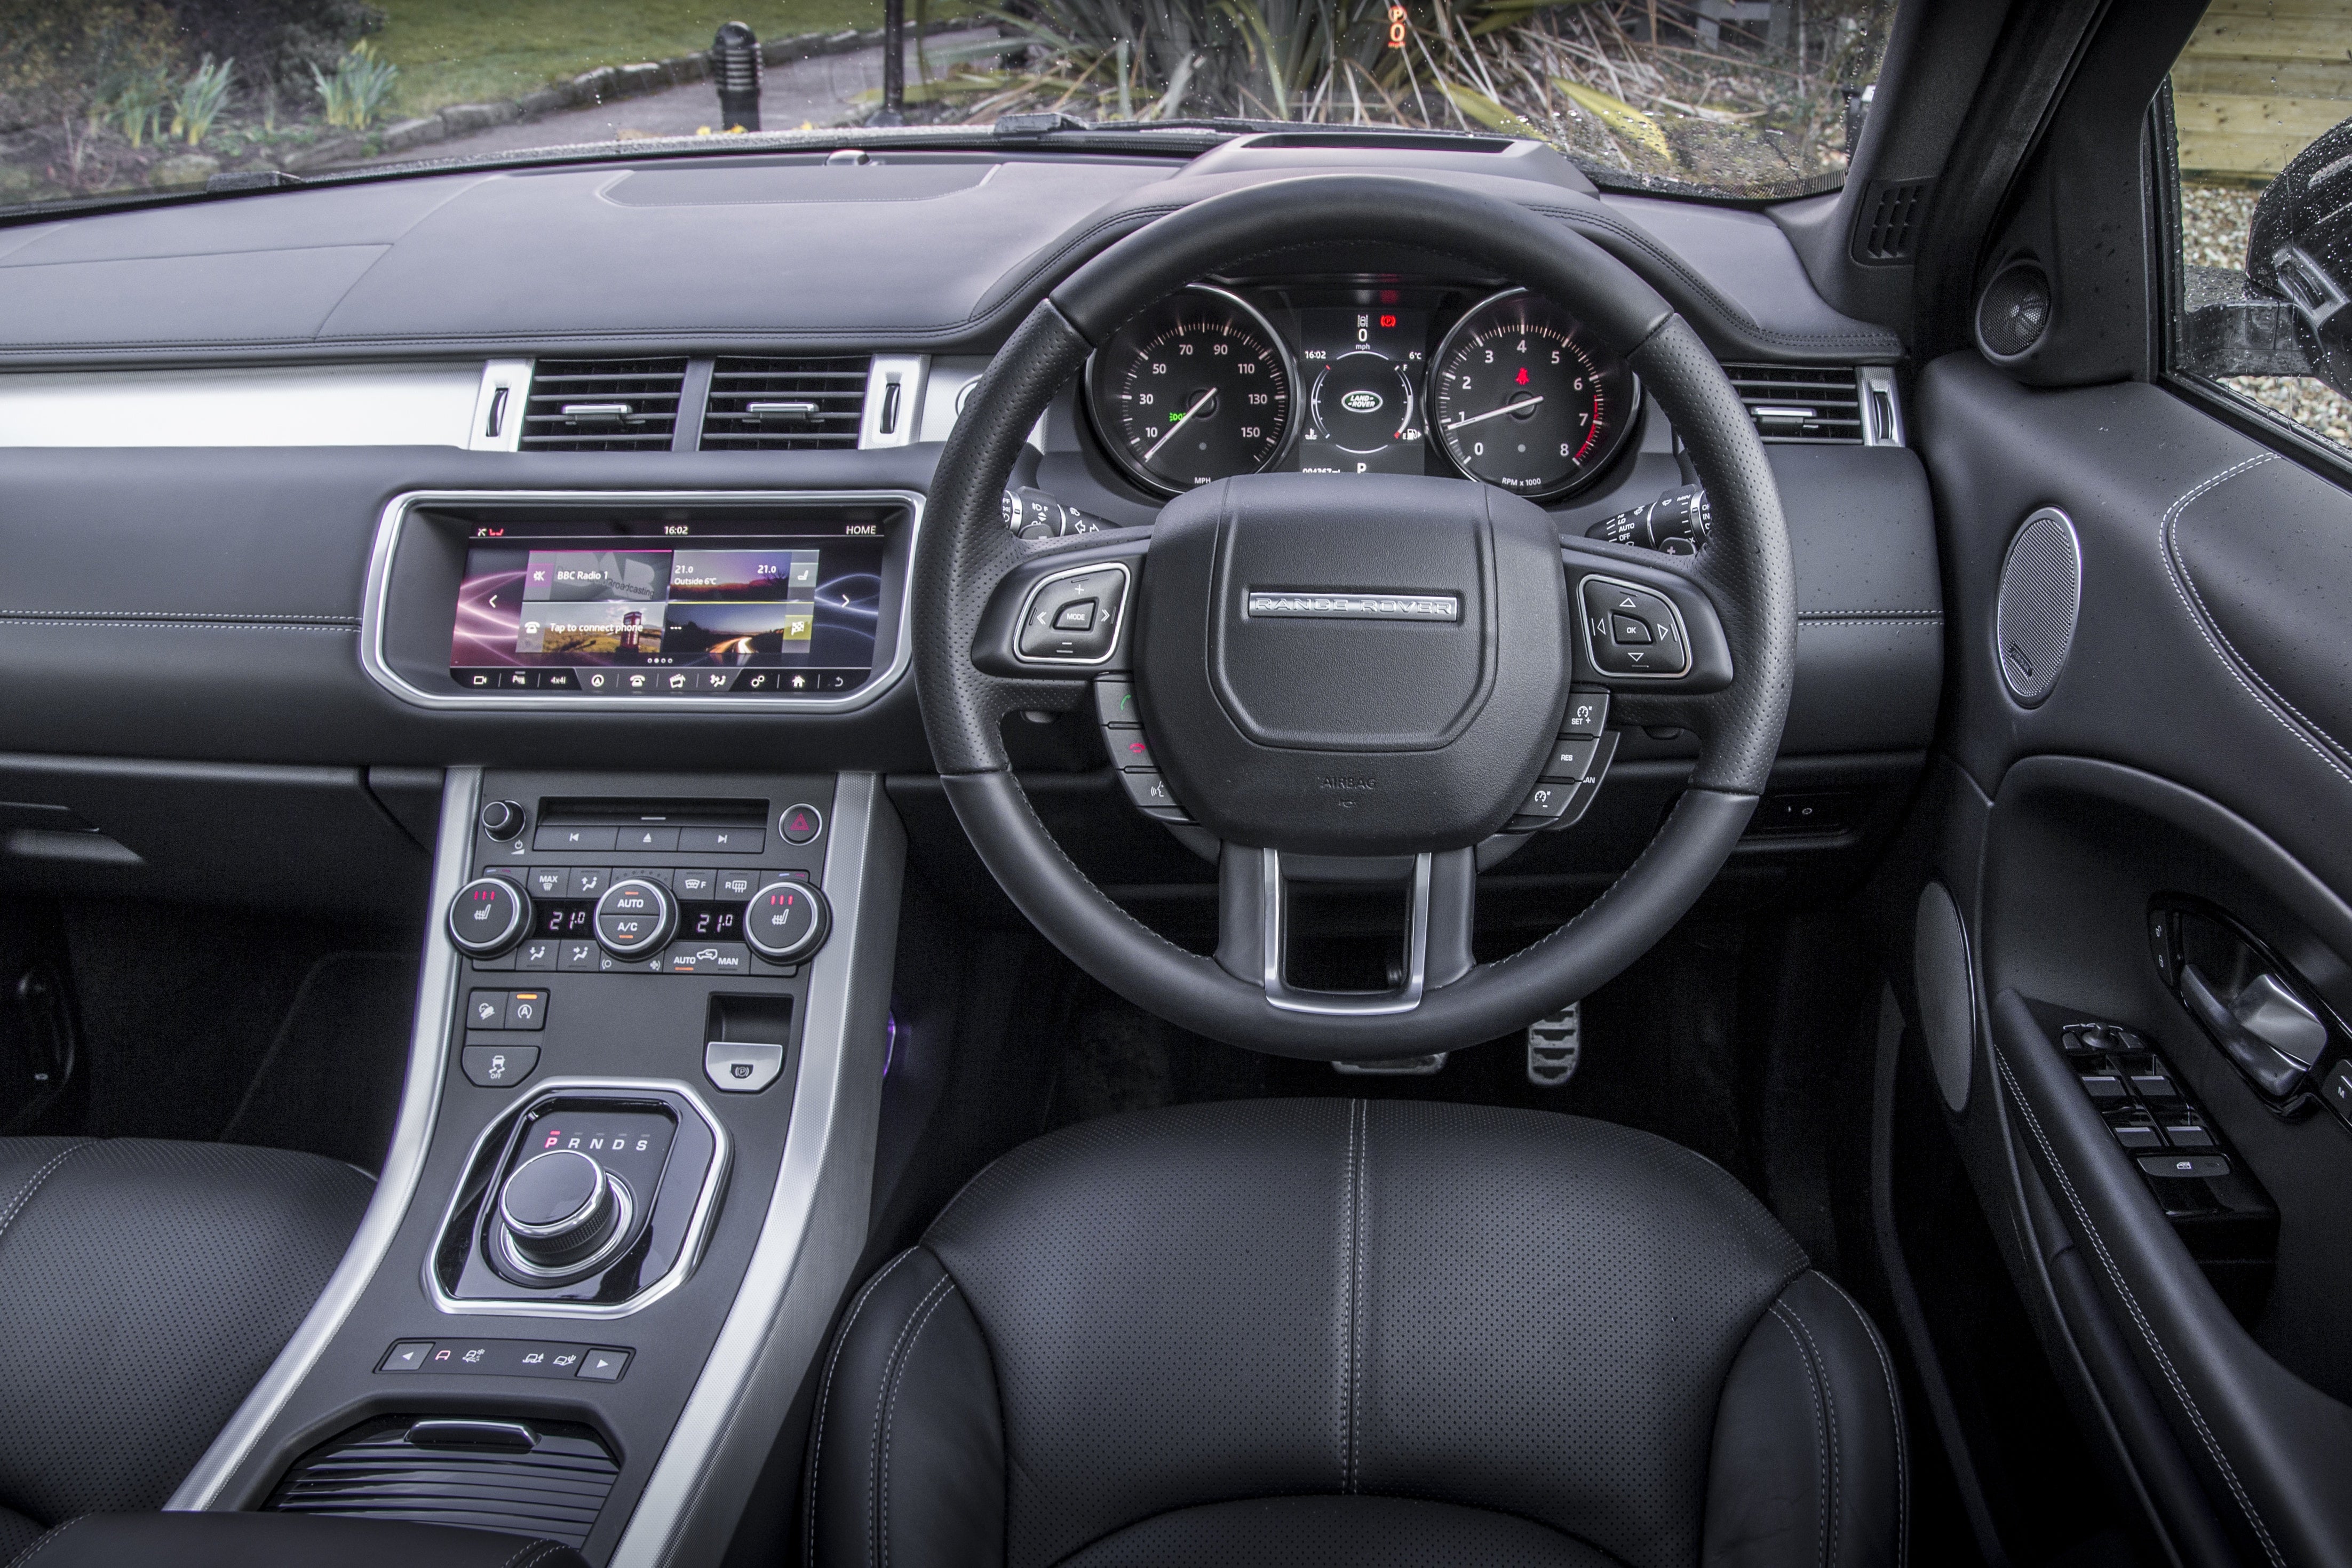 Range Rover Evoque 2011 front interior